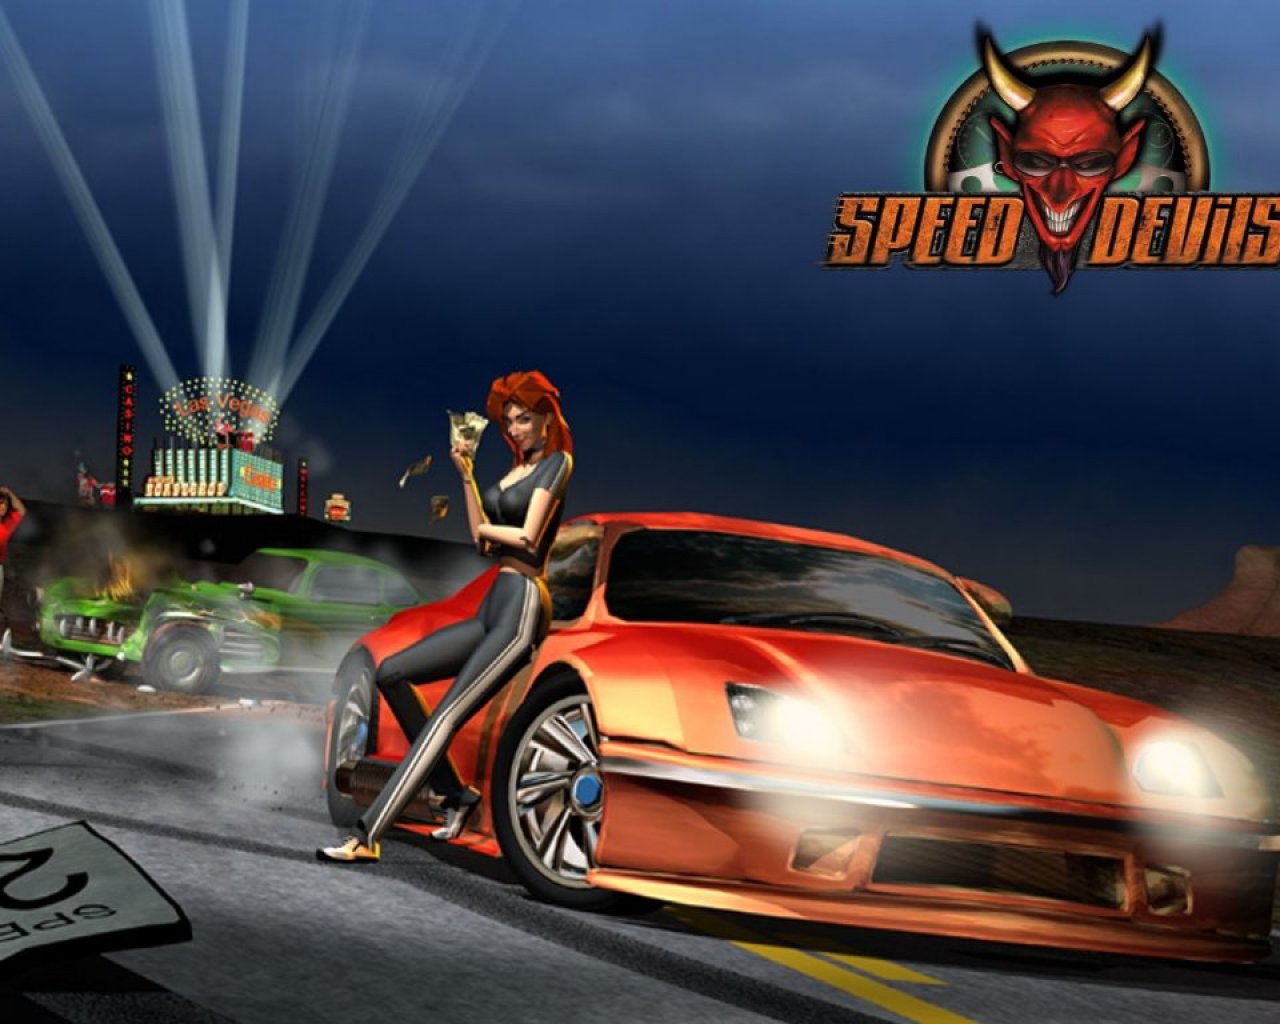 Fuku speed up. Speed Devils Dreamcast. Devil гонки. Speed up игра.